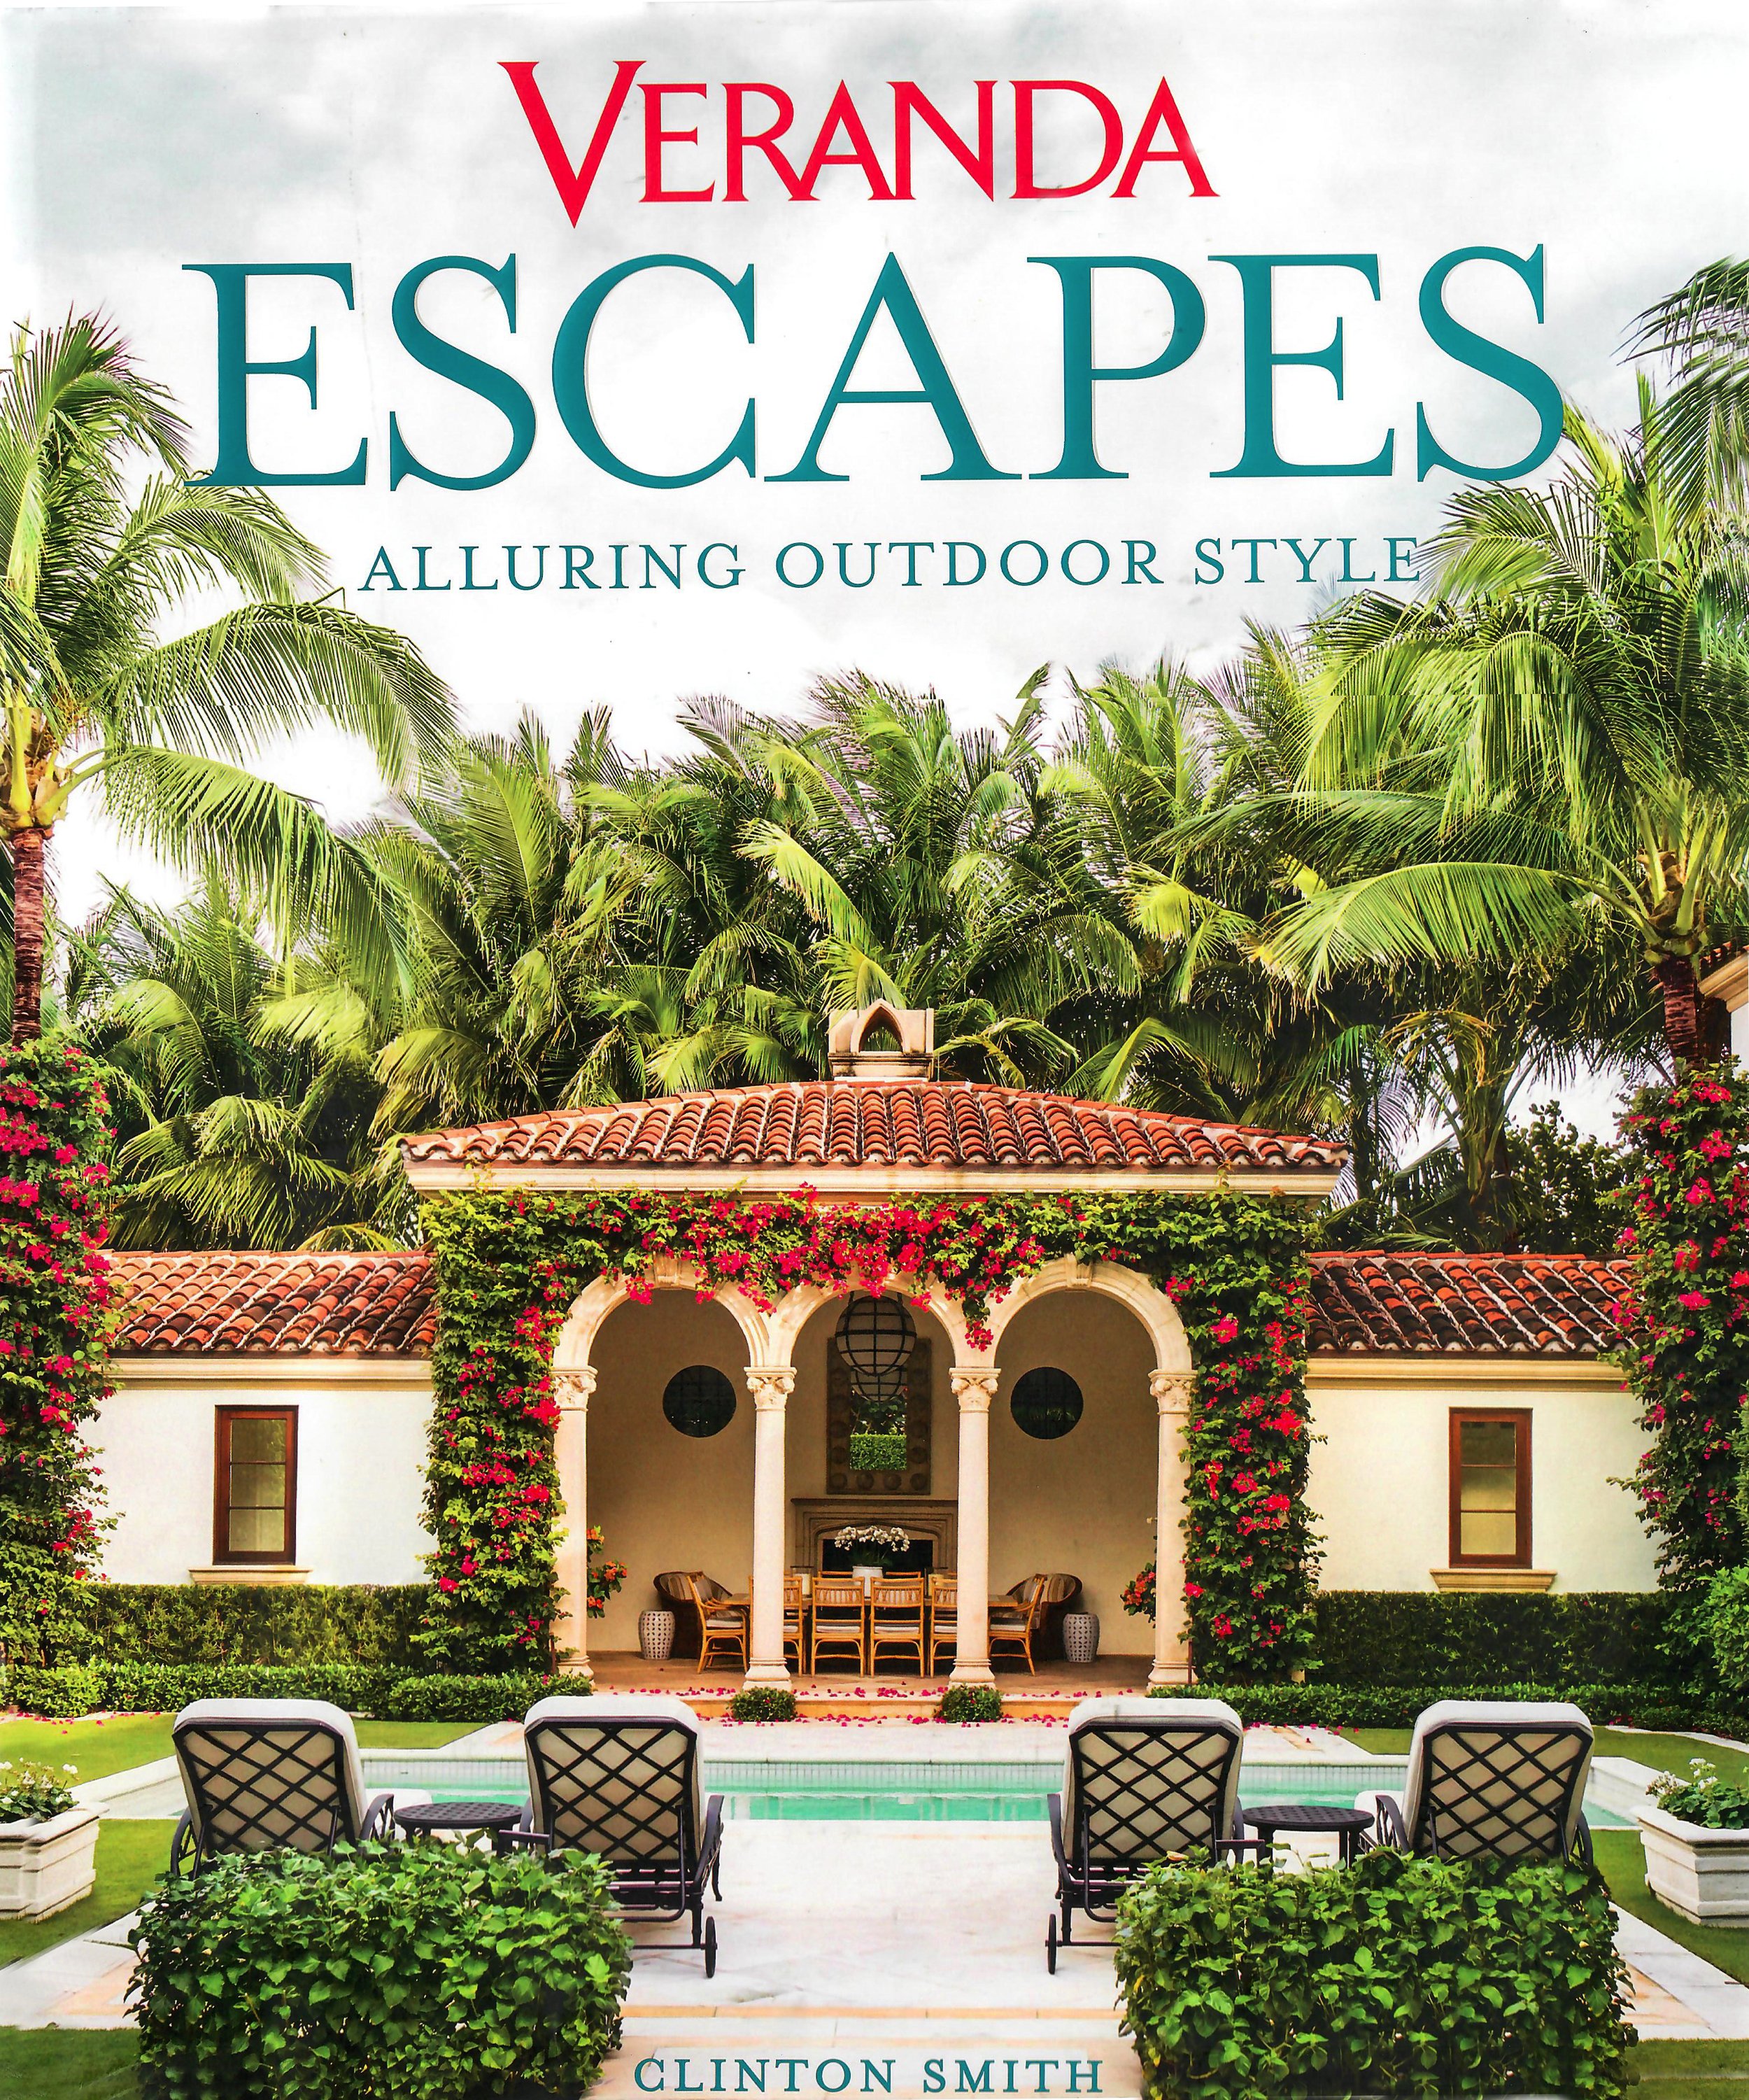 Veranda Escapes book cover.jpg